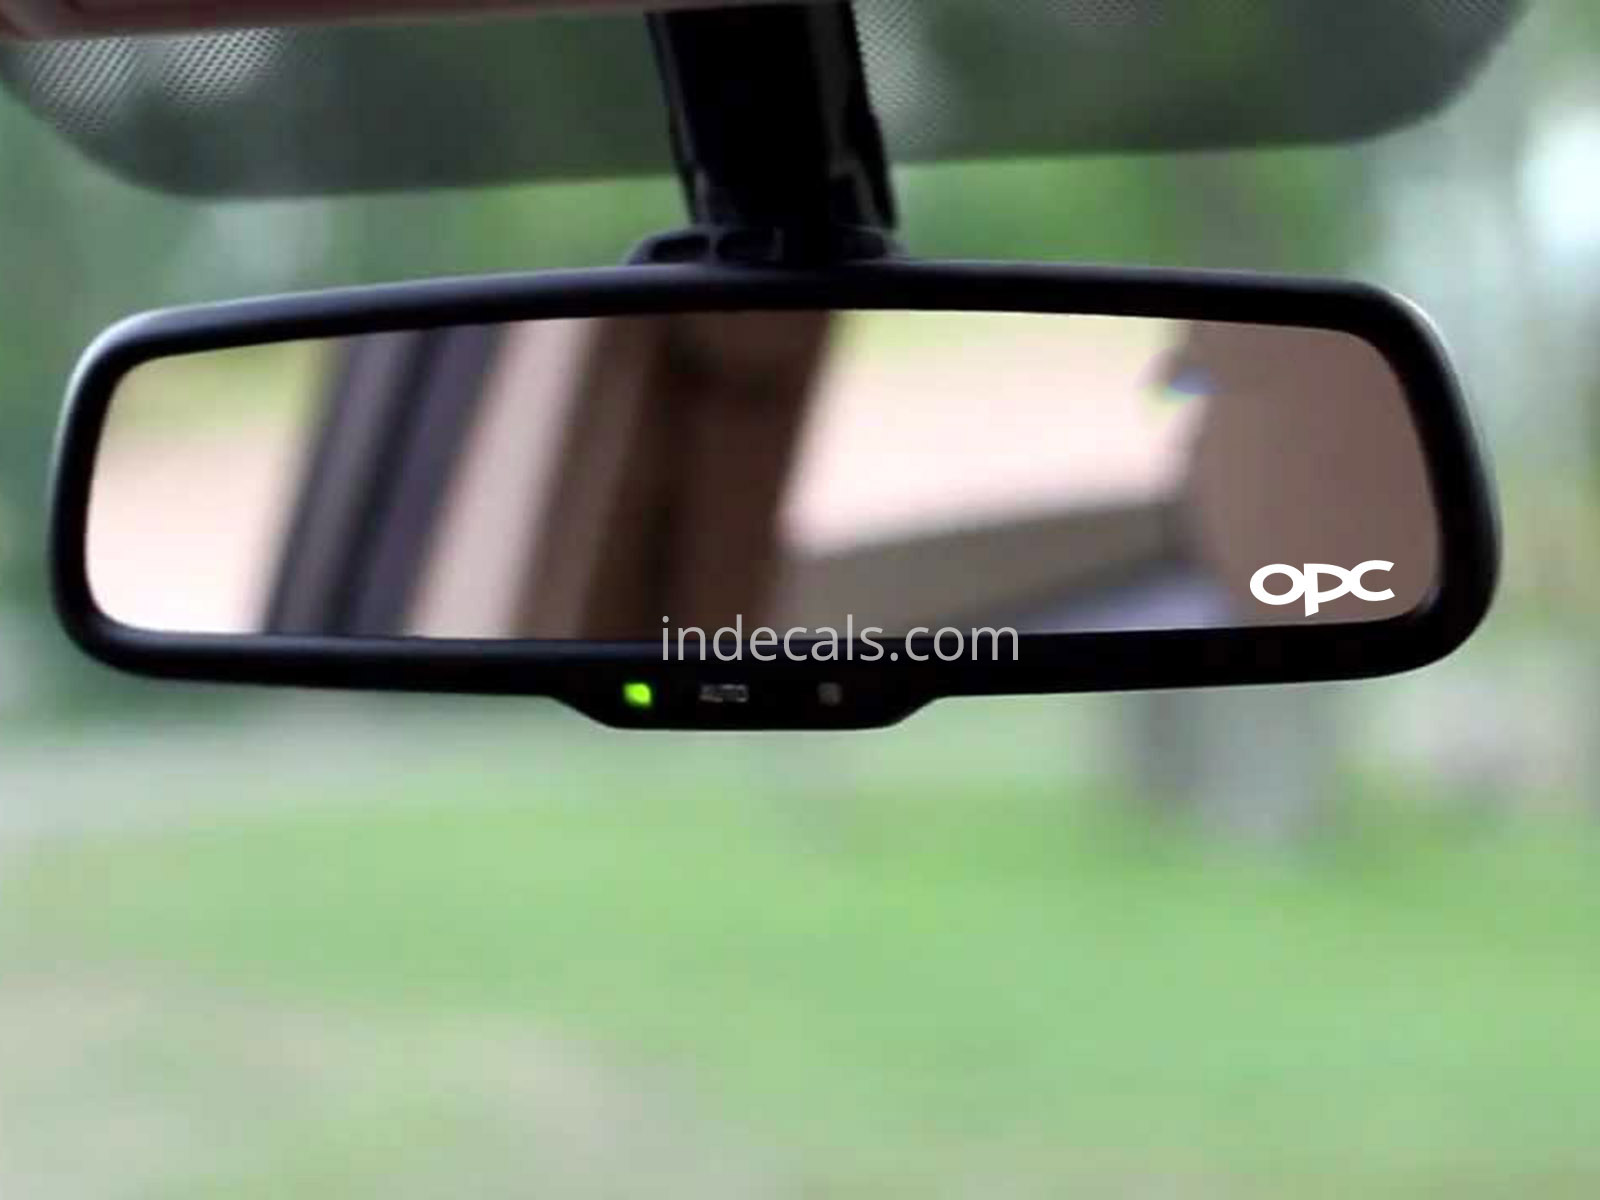 3 x Opel OPC Stickers for Interior Mirror - White